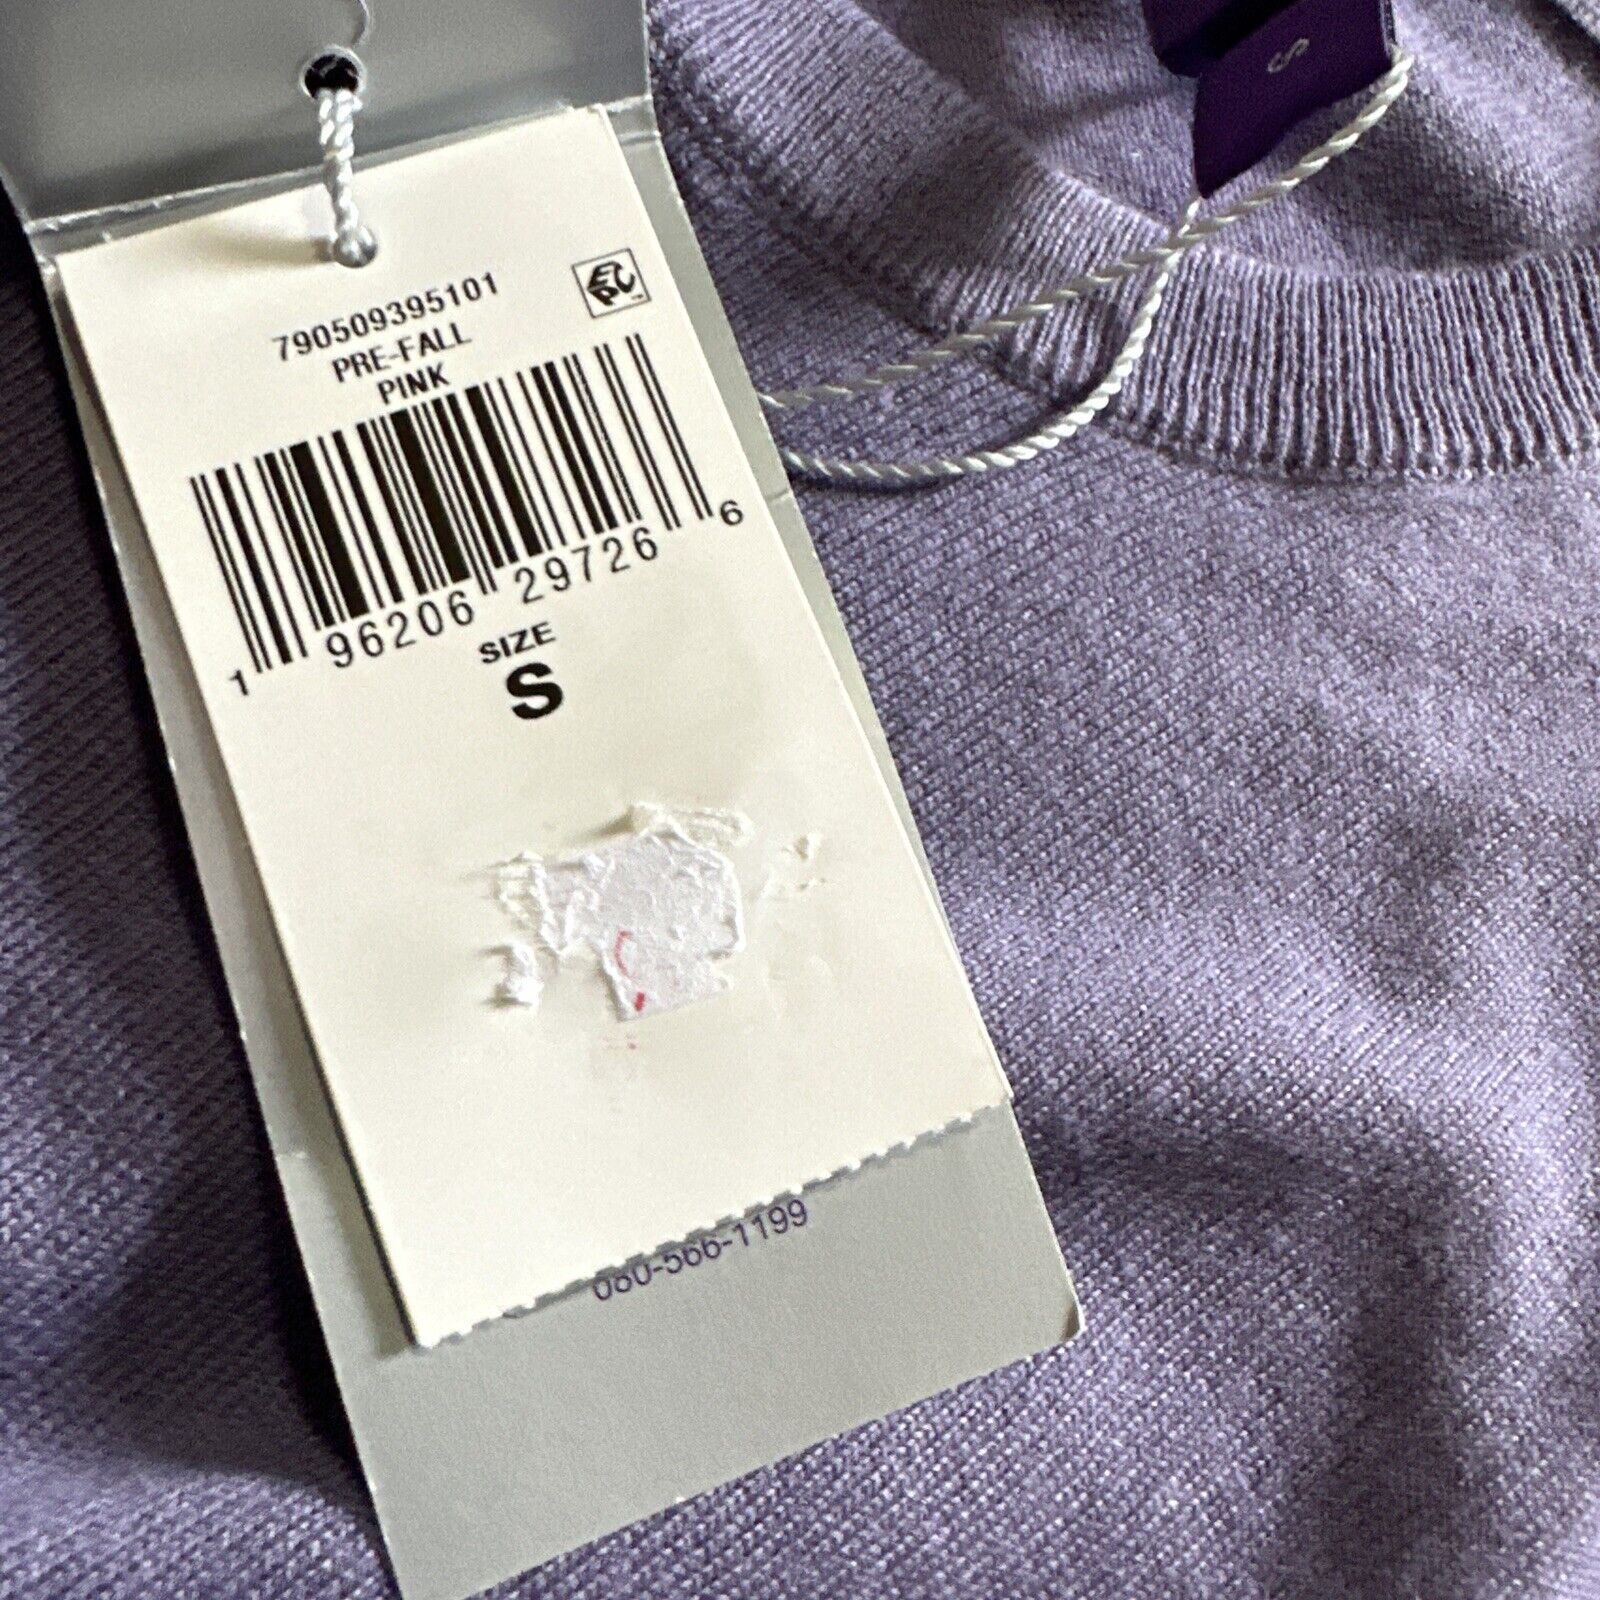 NWT $995 Ralph Lauren Purple Label Men Crewneck Cashmere Sweater LT Purple S Ita